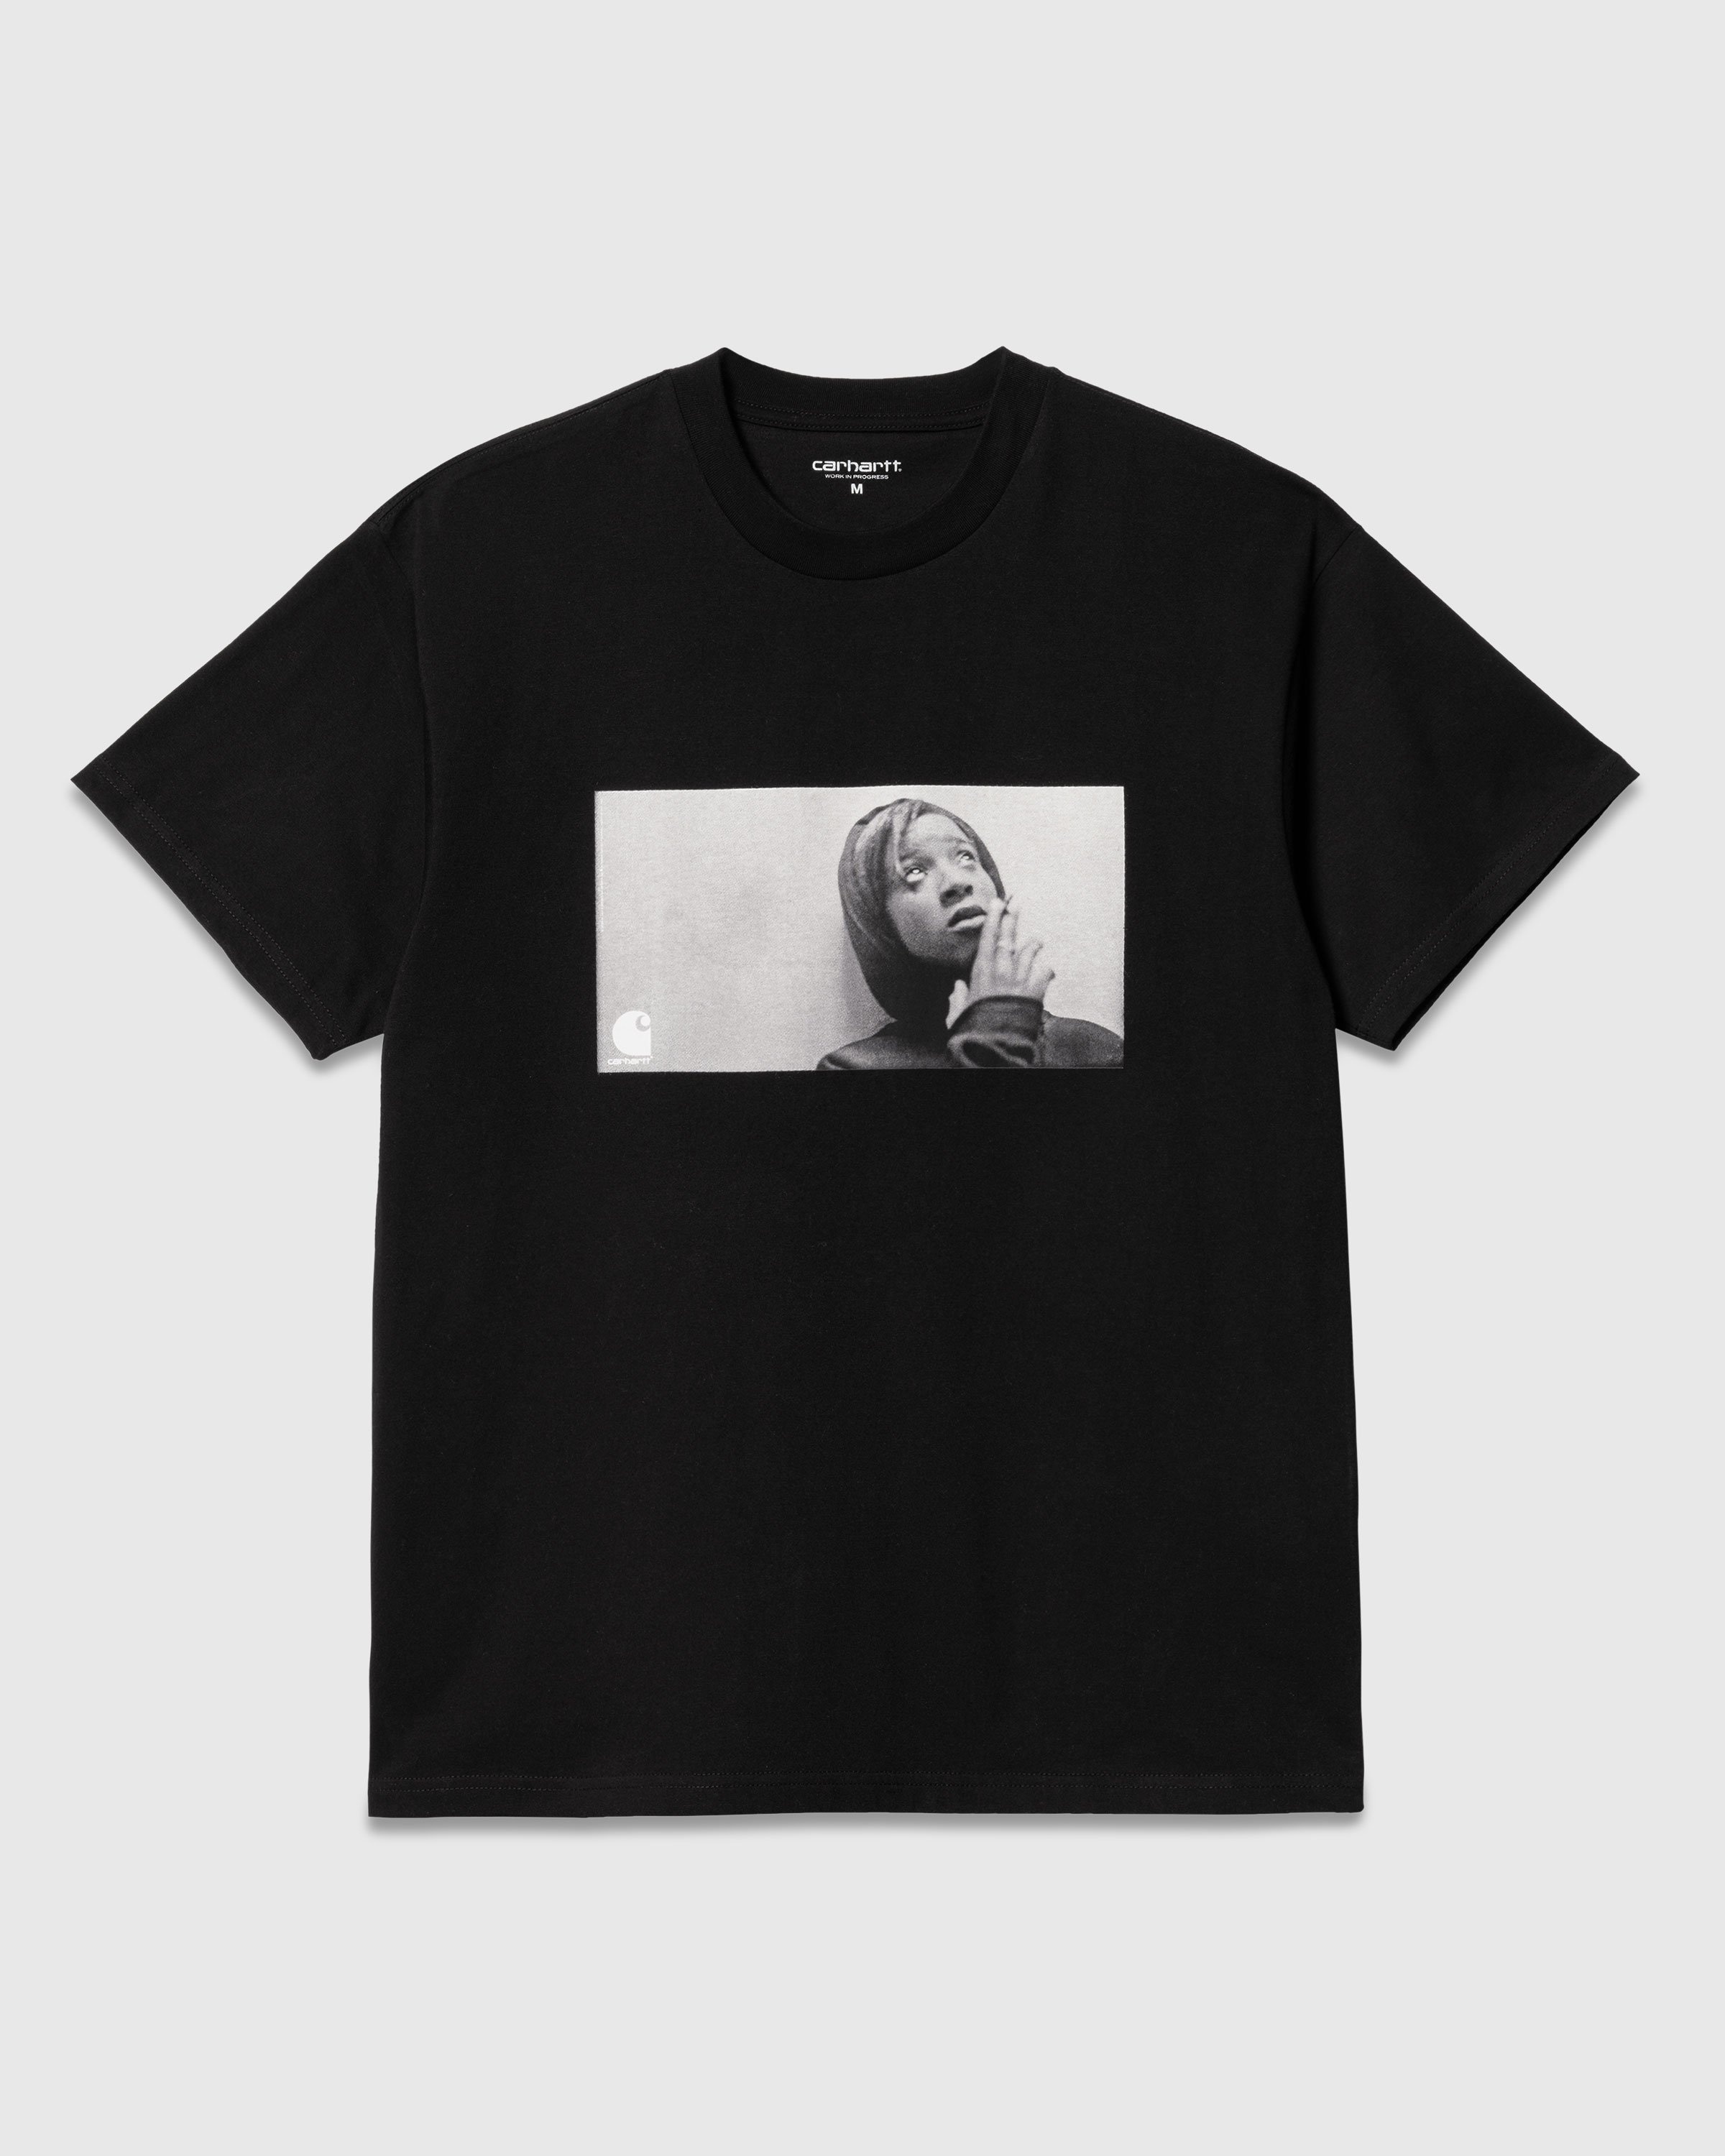 Carhartt WIP – Archive Girl T-Shirt Black